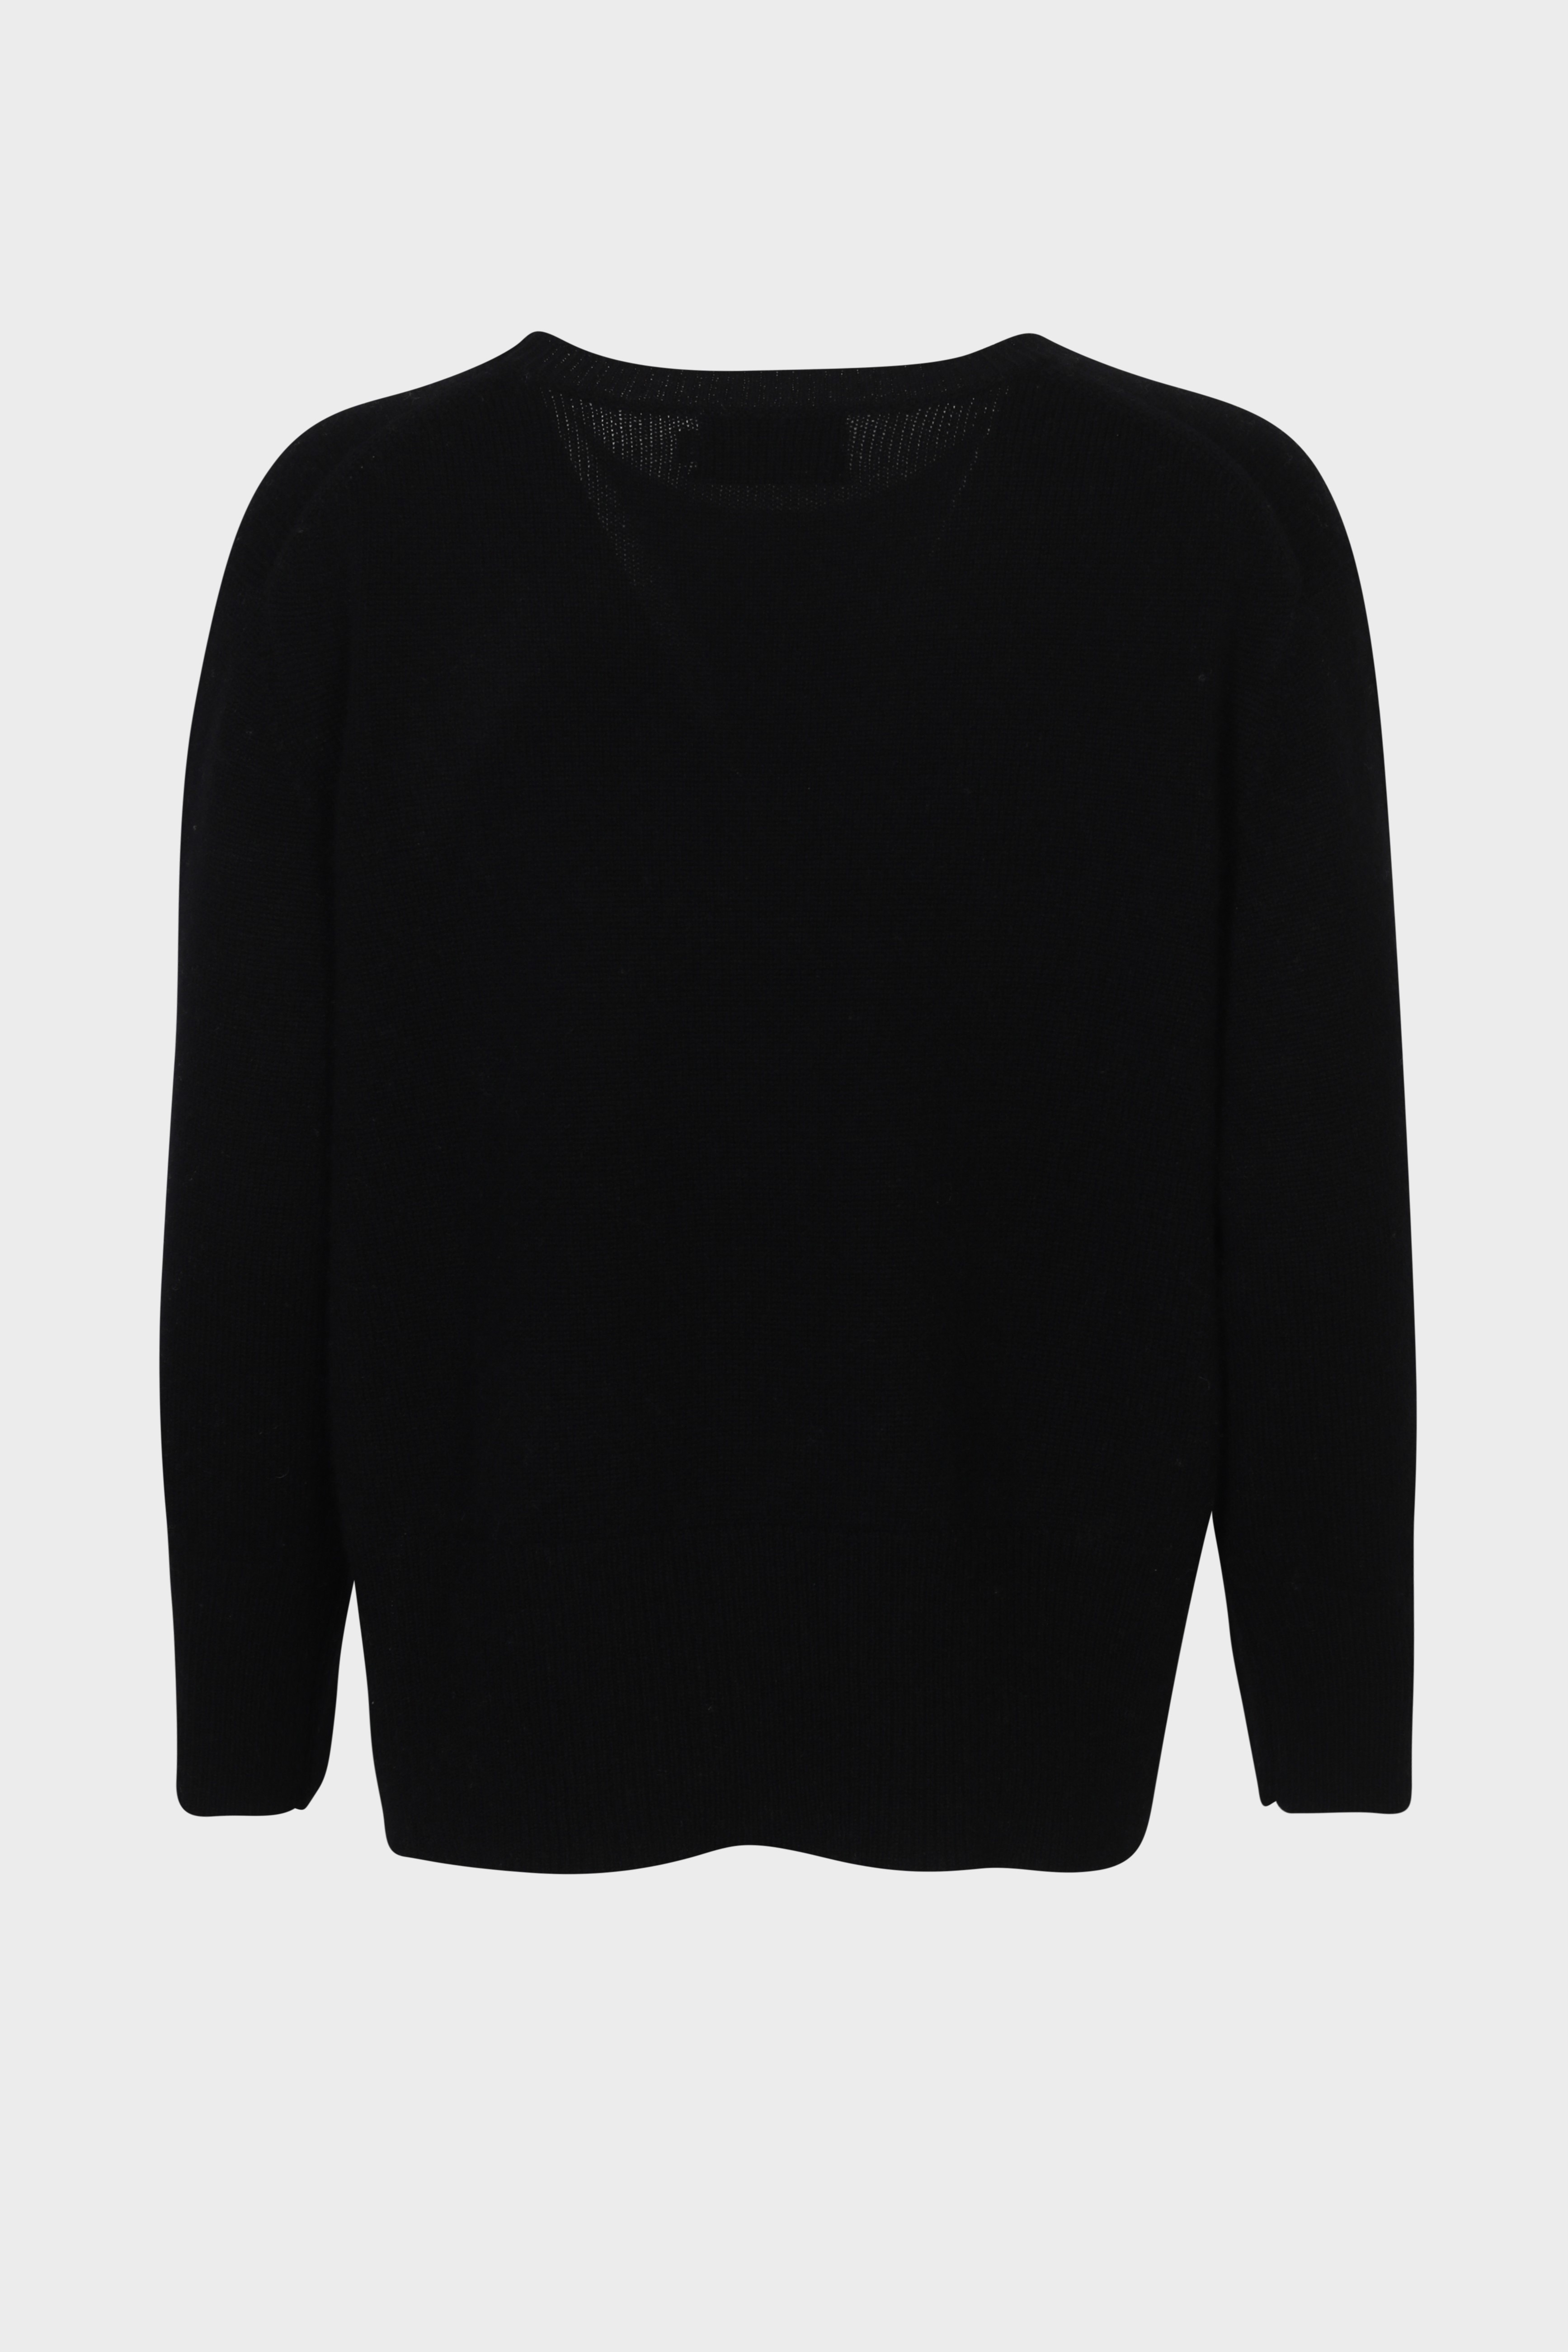 FLONA Cashmere Sweater in Black M